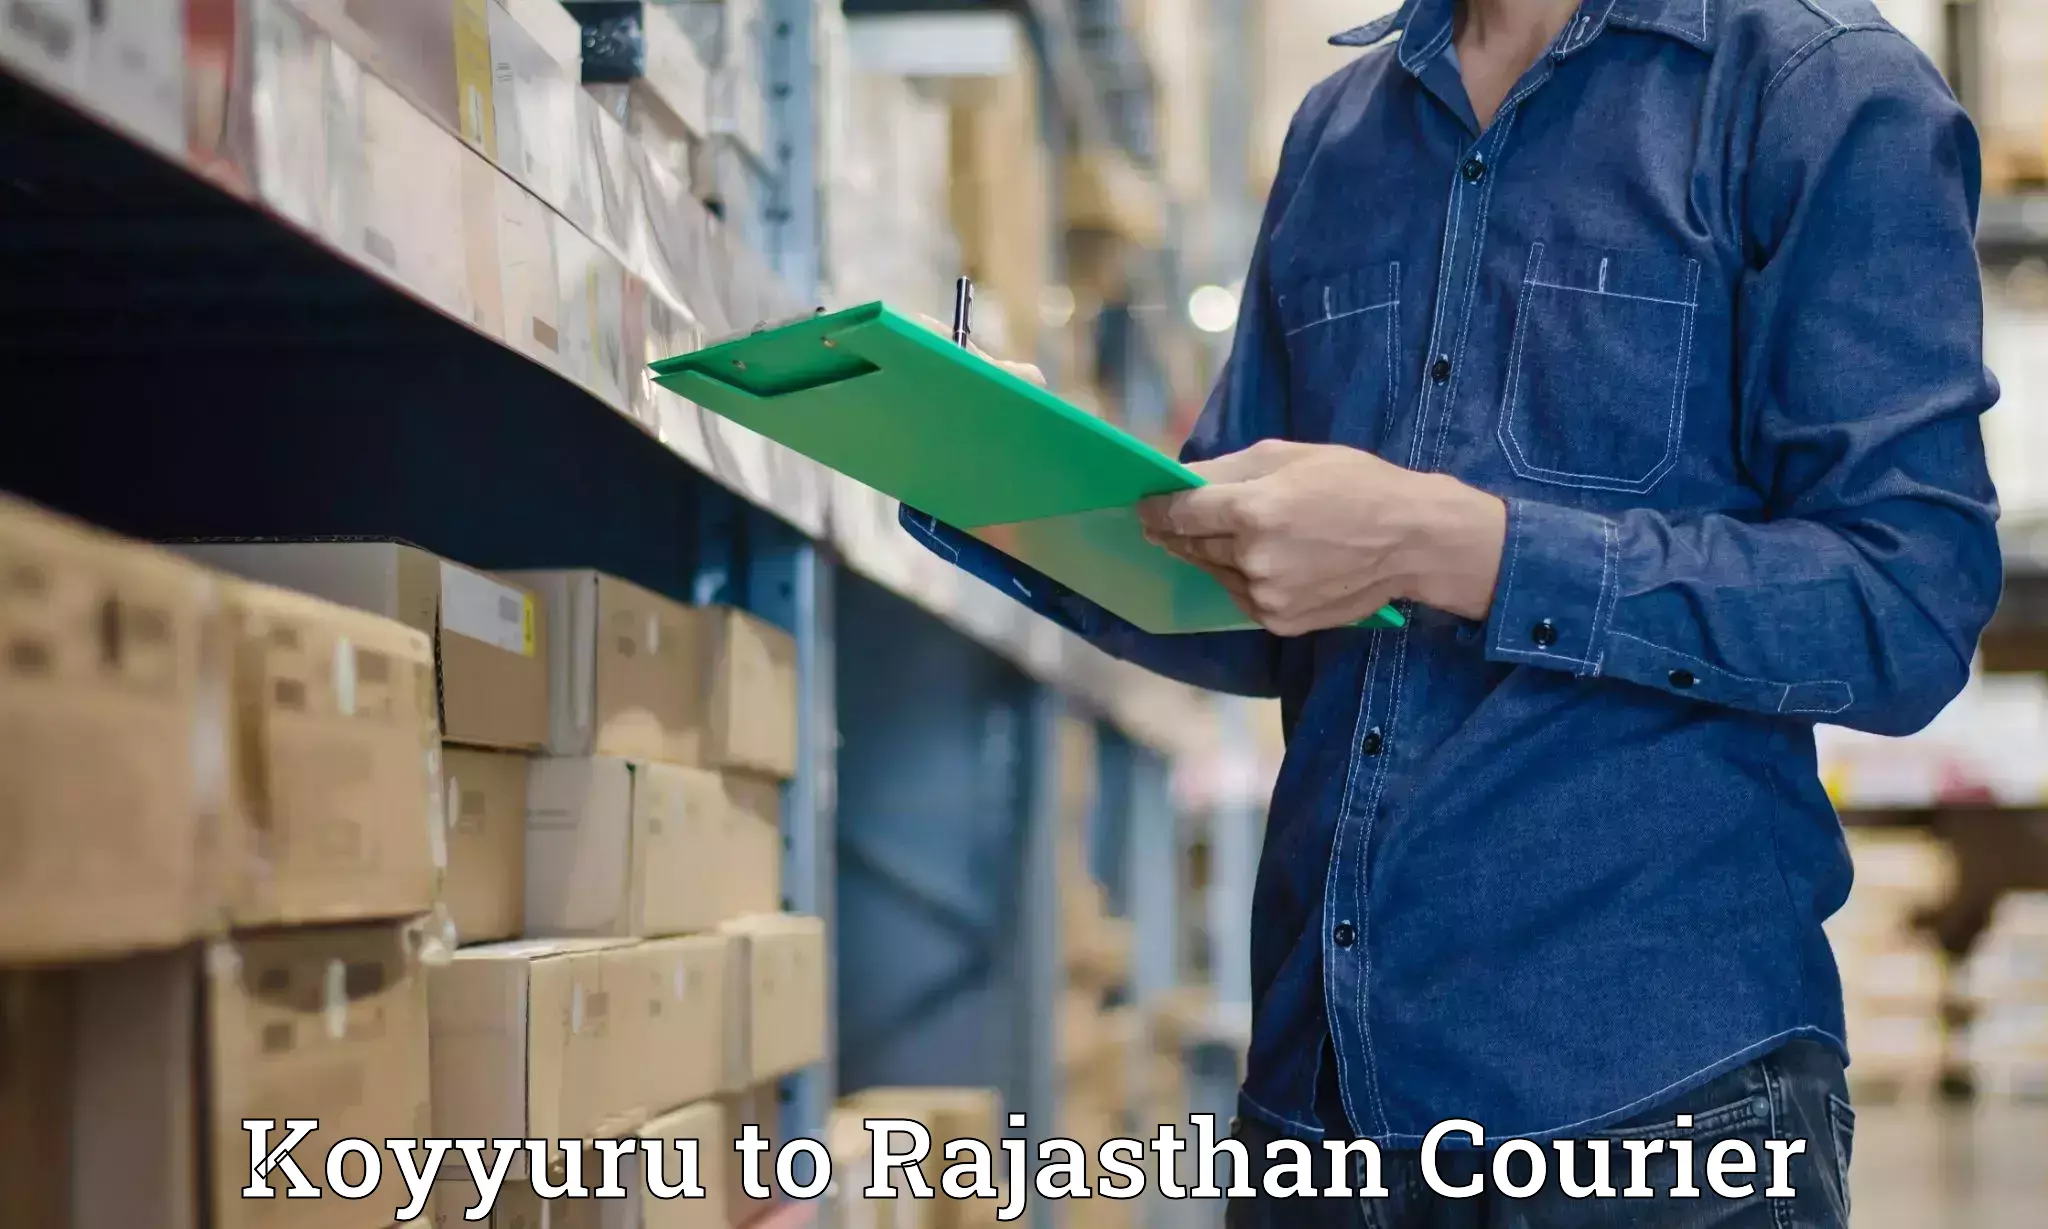 On-call courier service Koyyuru to Jaipur